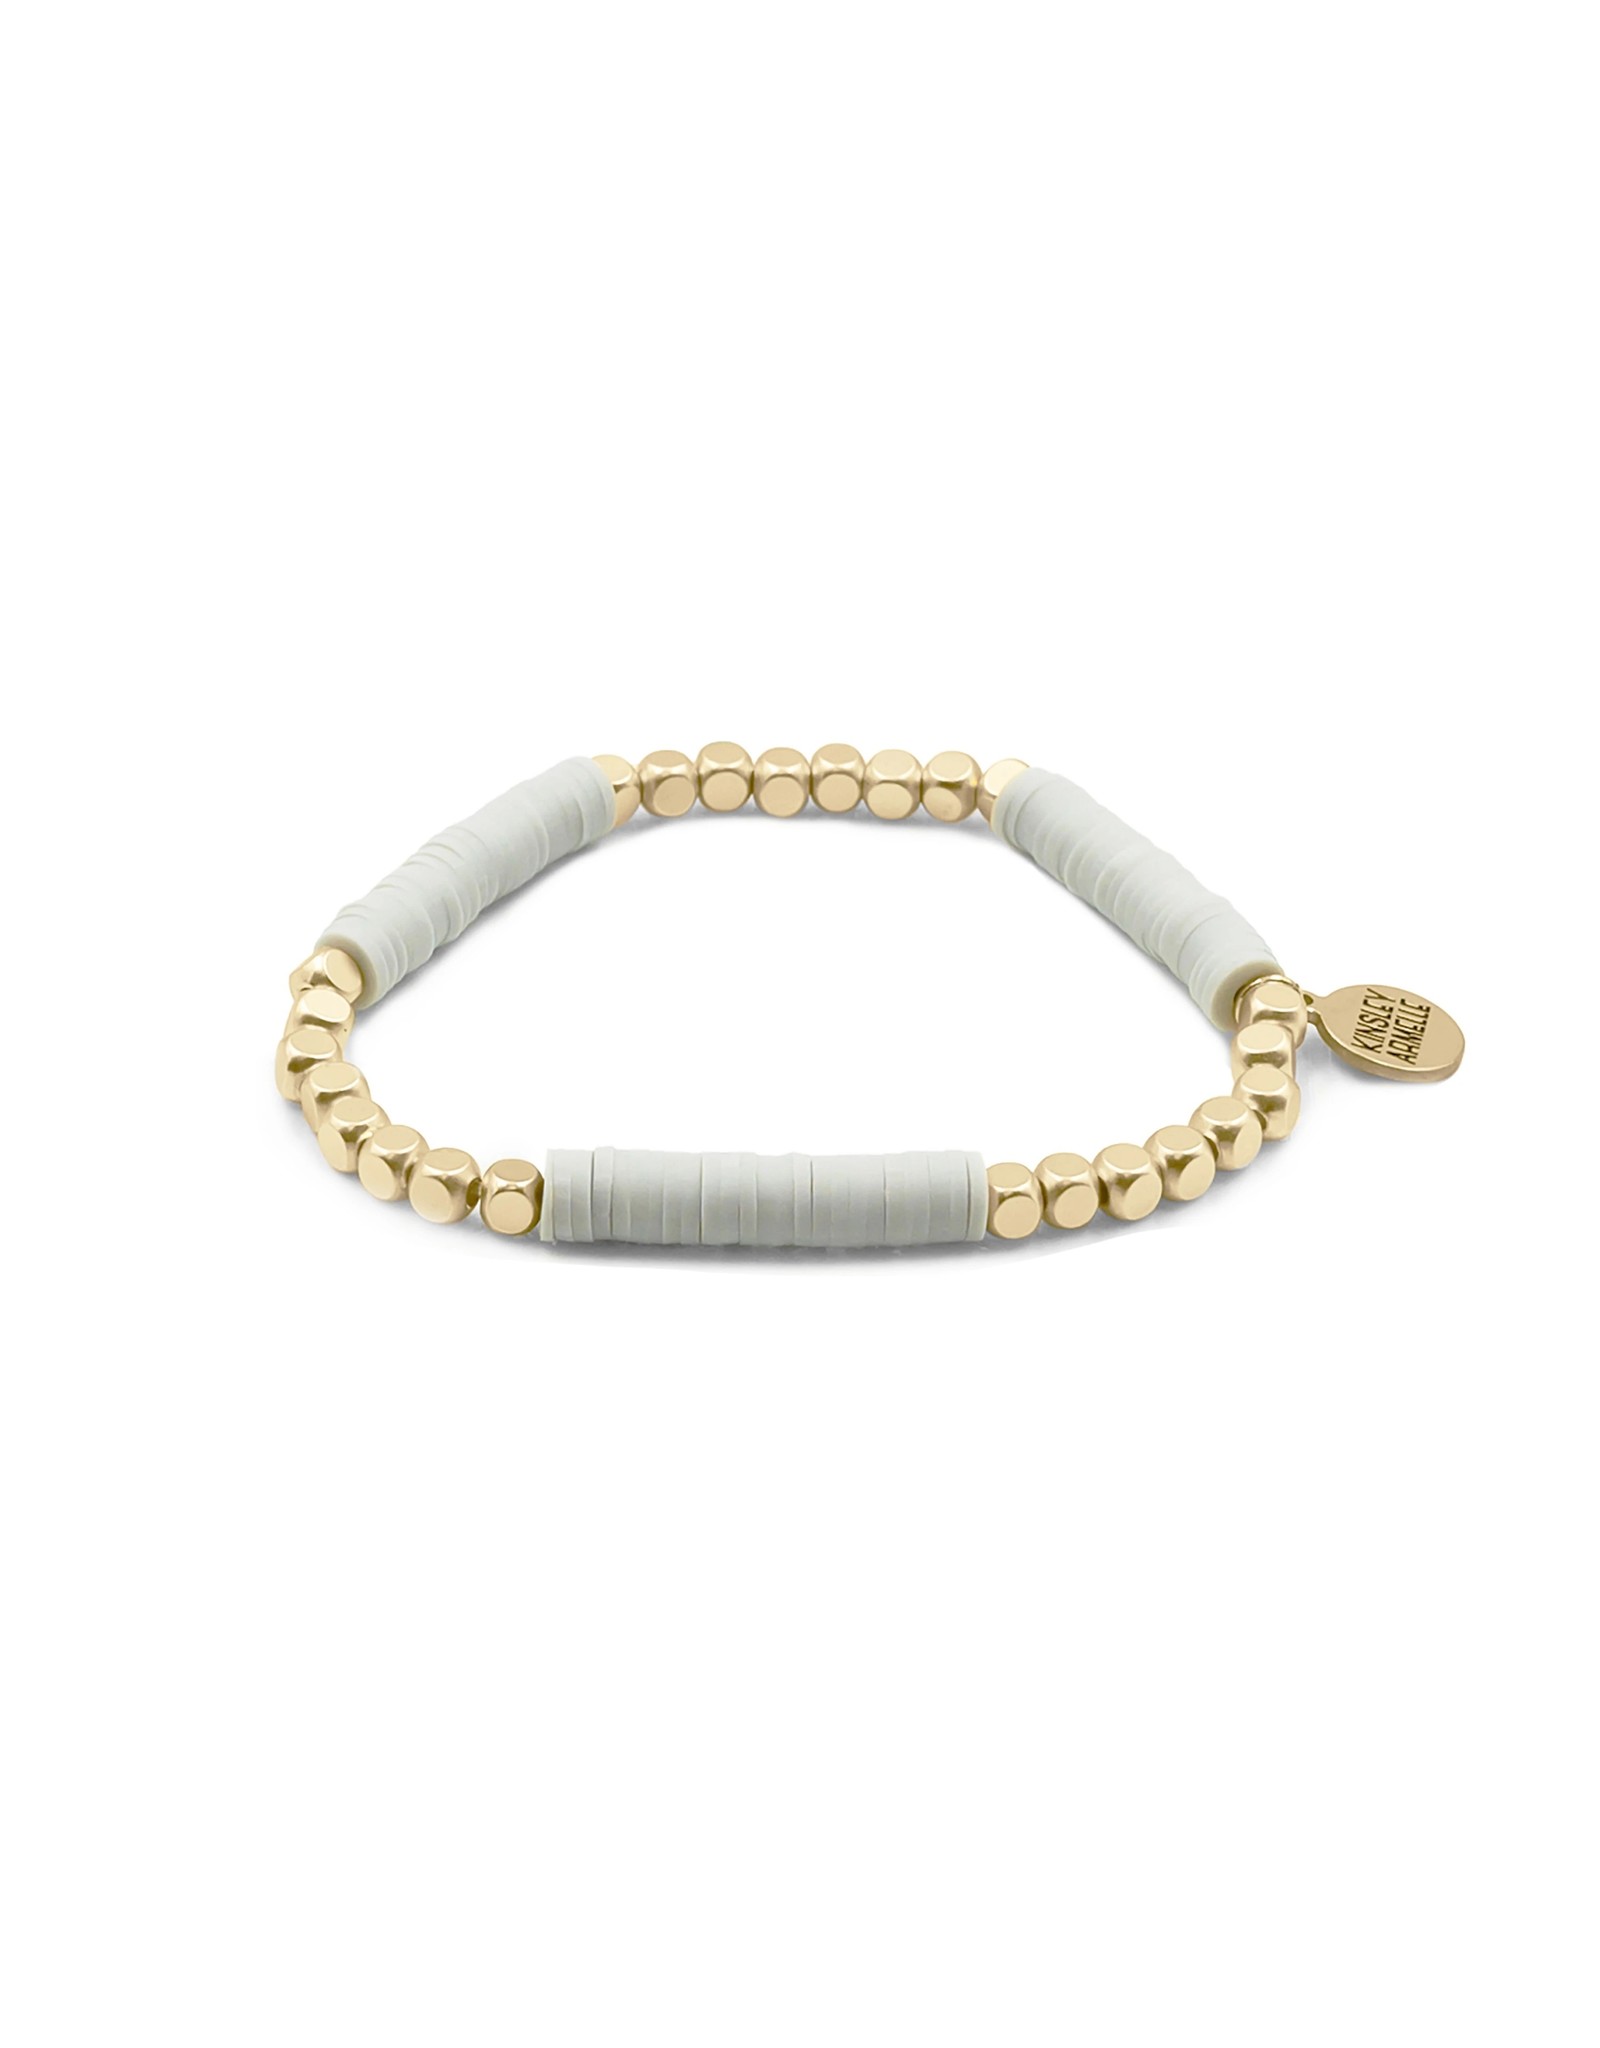 Kinsley Armelle Livia Collection-Misty Bracelet